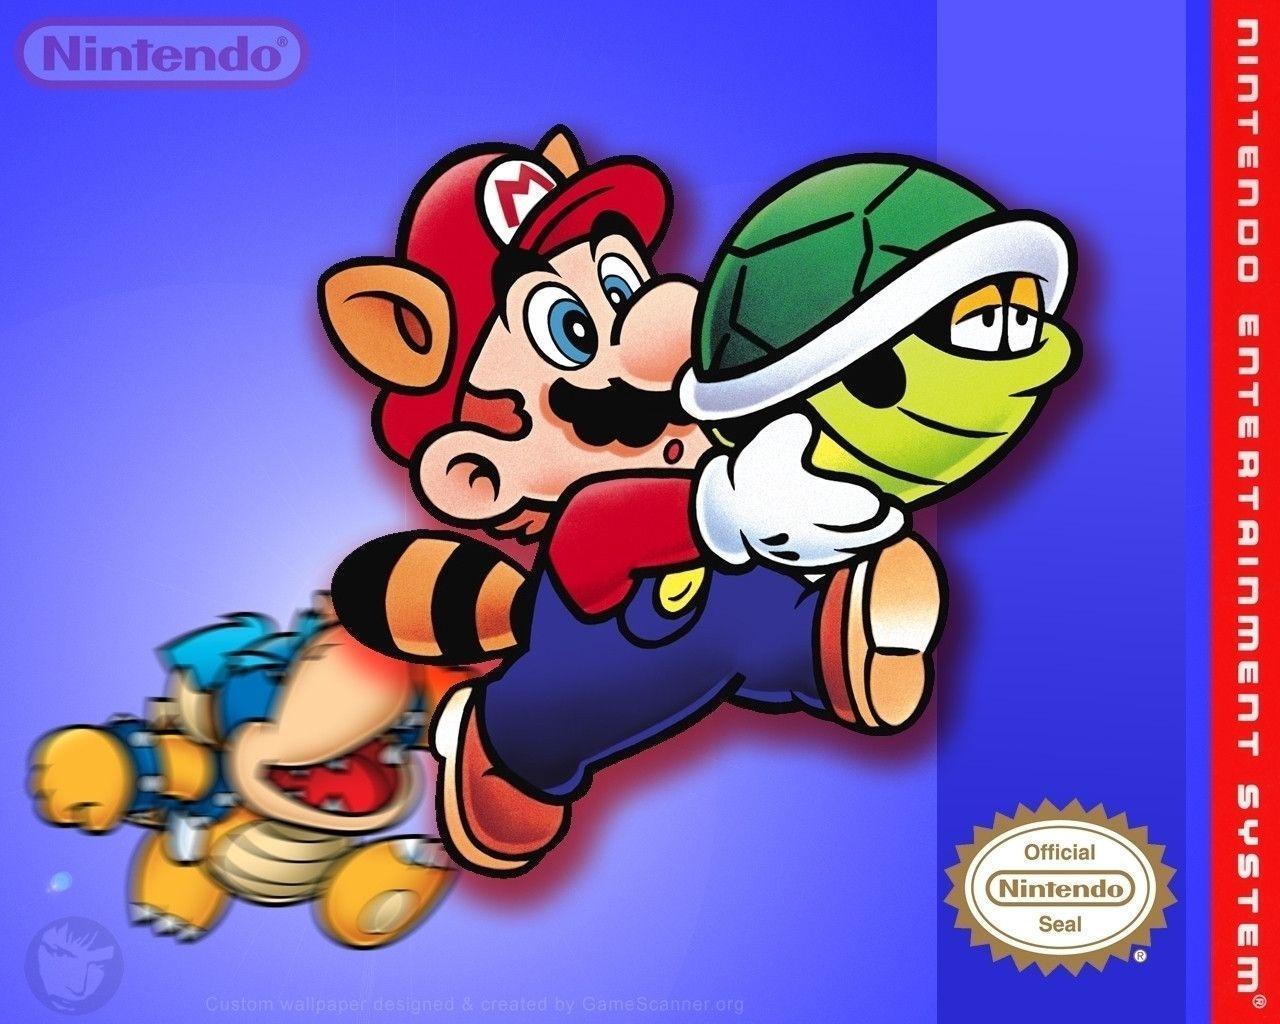 Super Mario Bros. - Super Mario 3 HD wallpaper and background